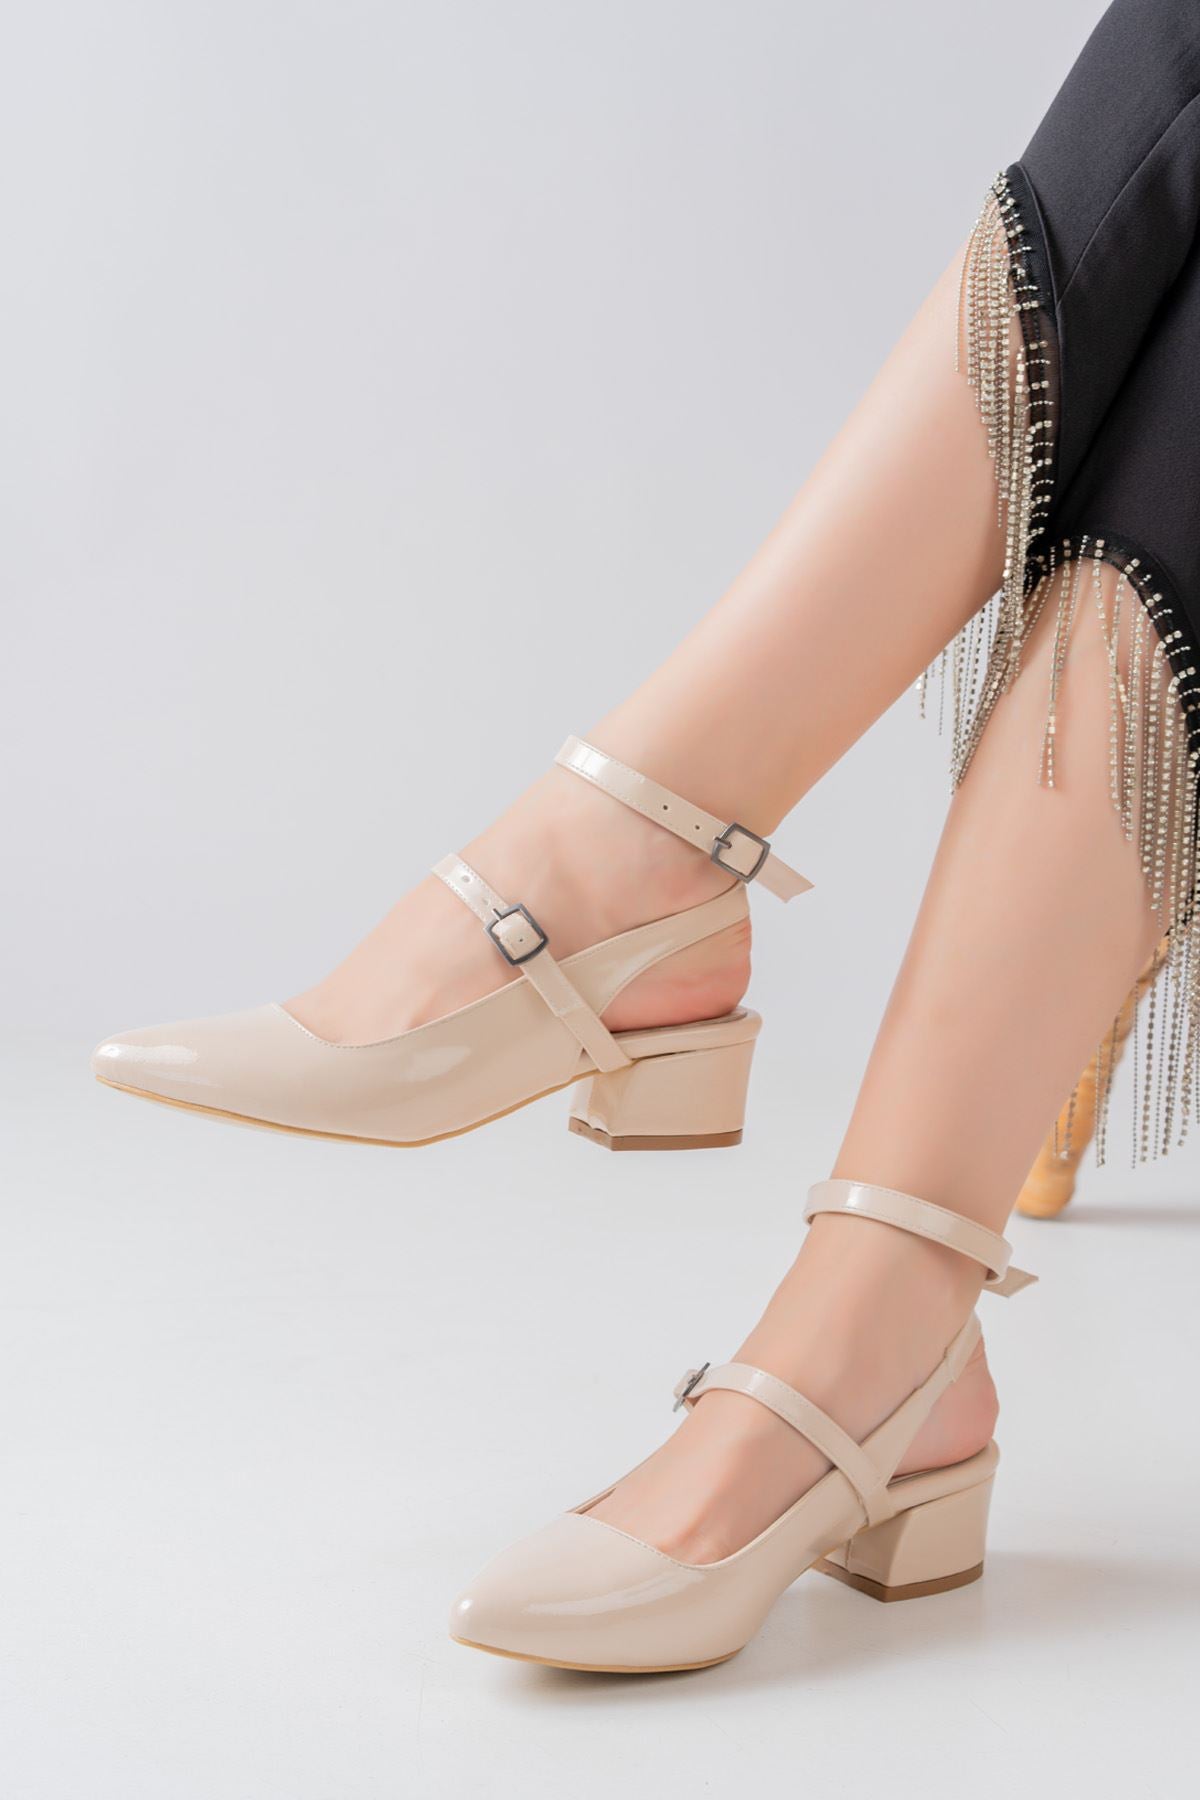 Nita Cream Patent Leather Low Heel Women's Shoes - STREETMODE™